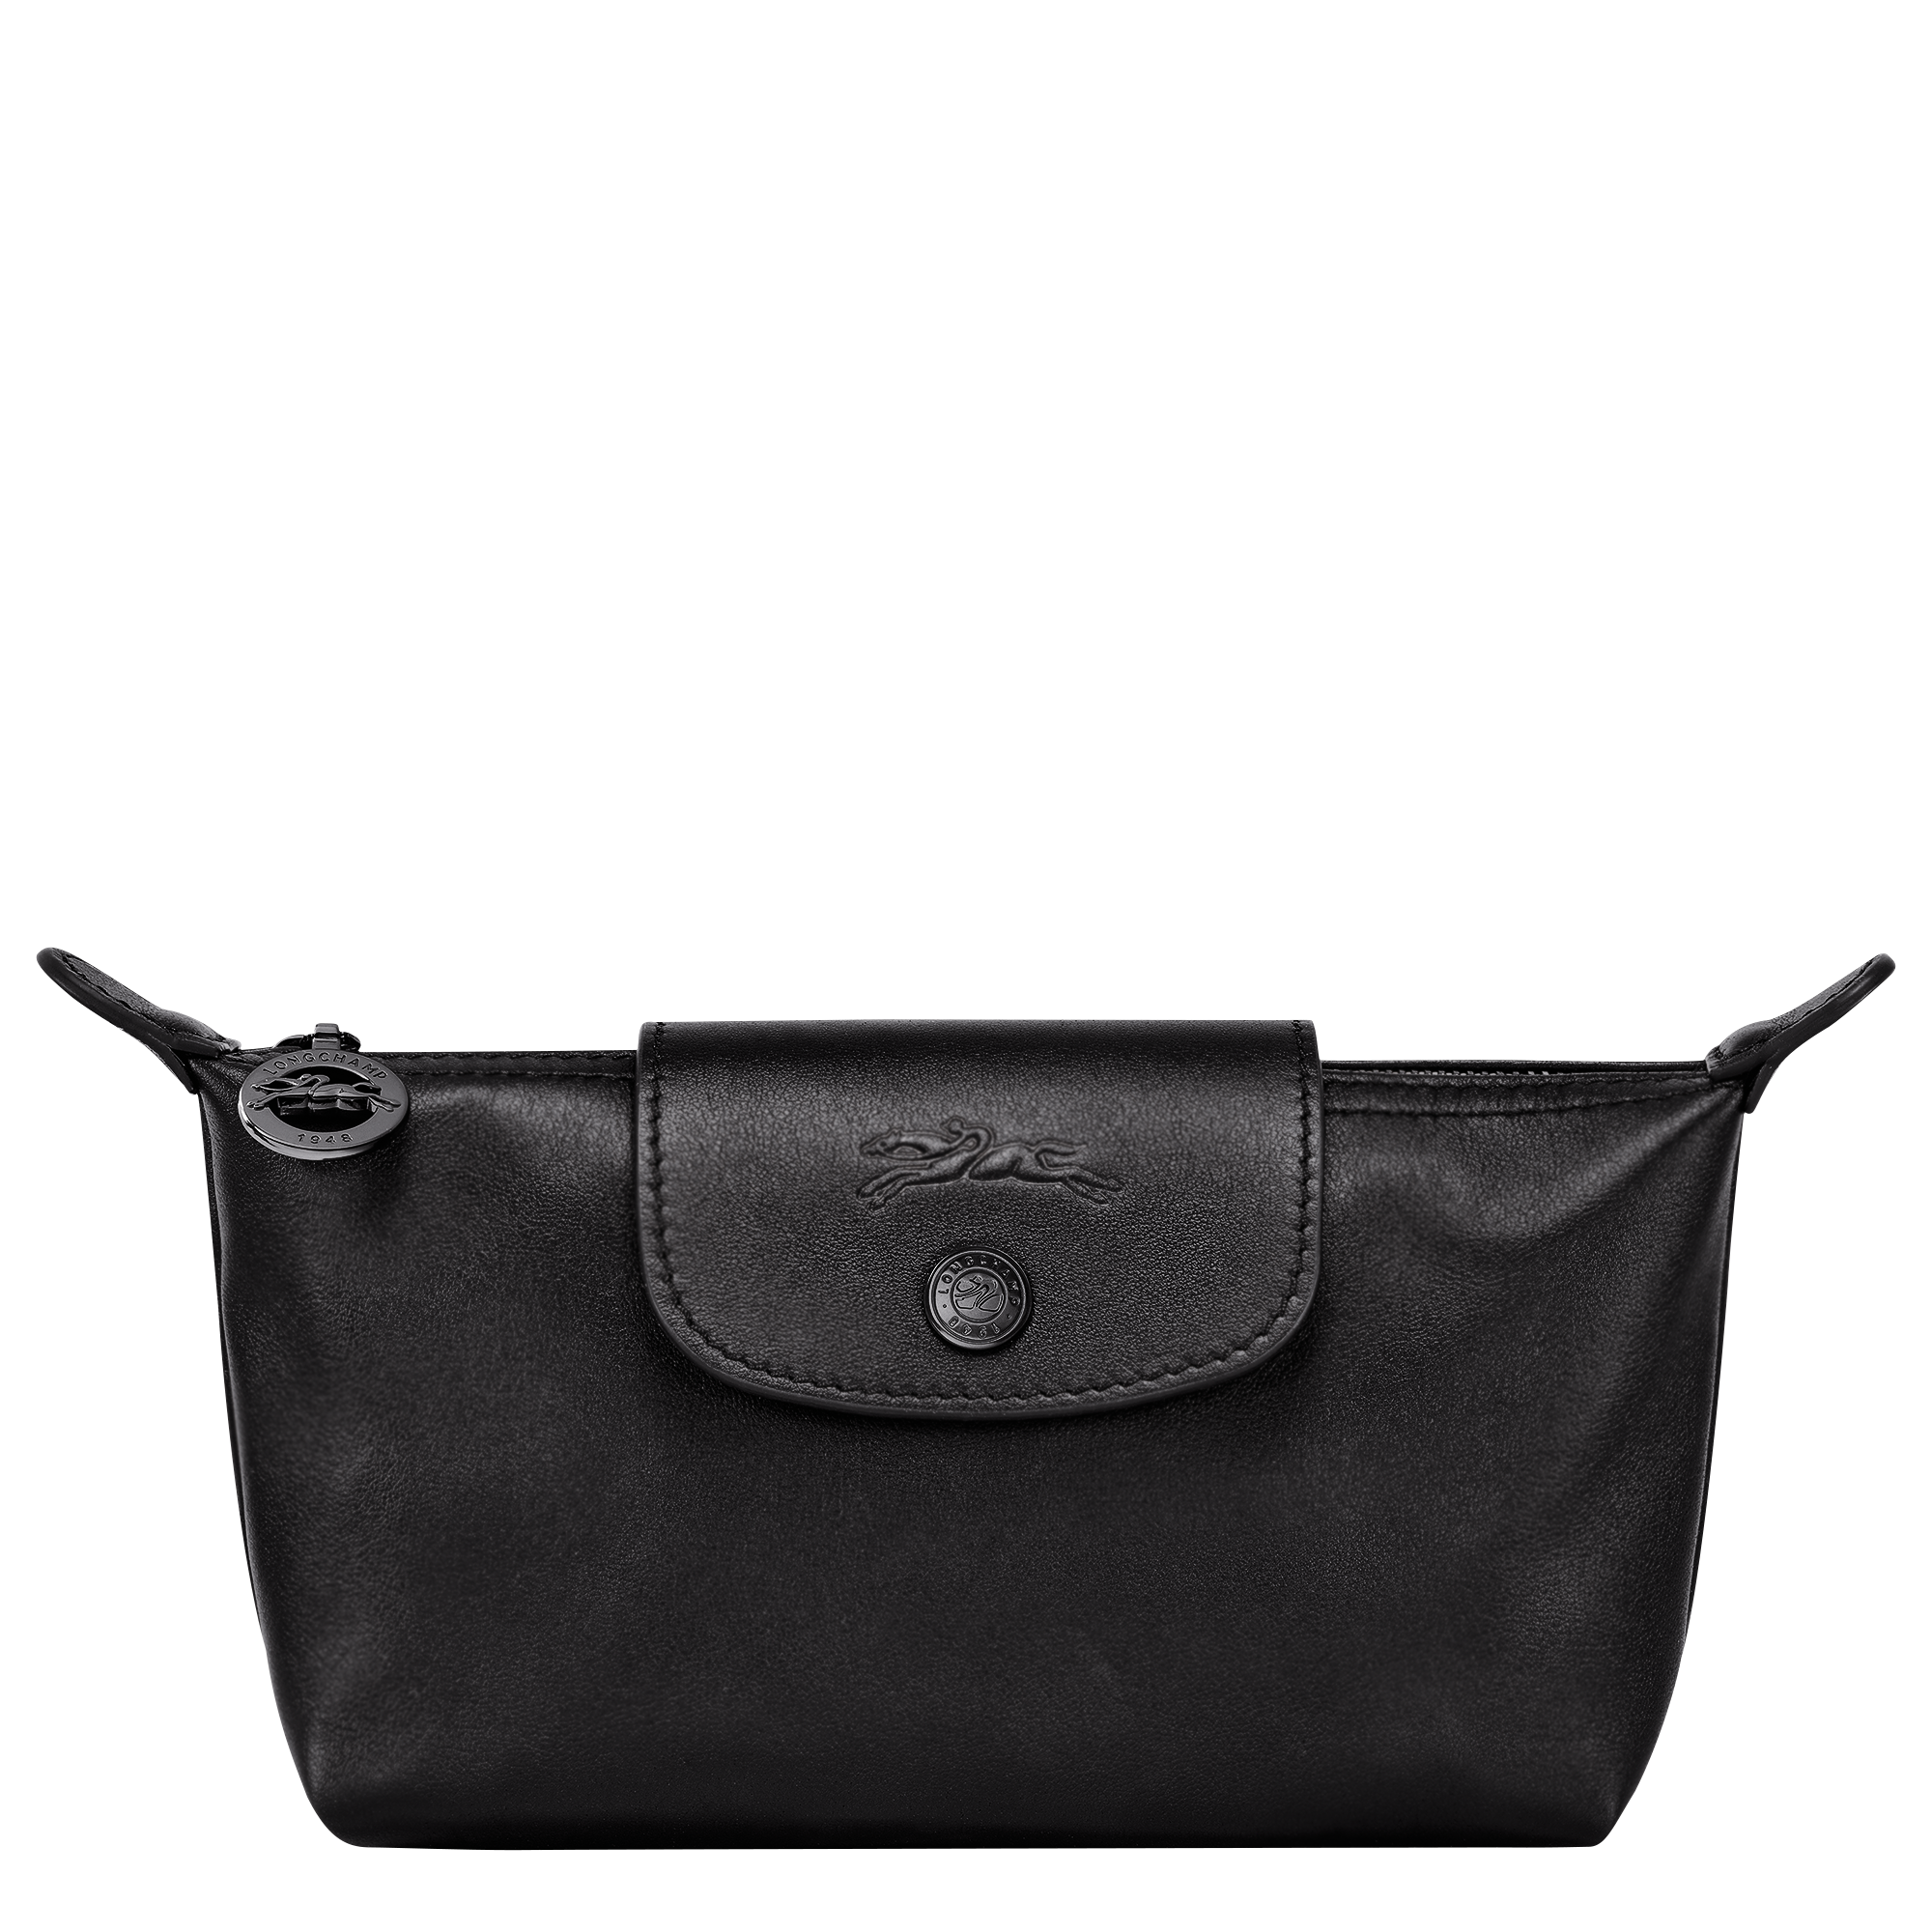 Le Pliage Xtra XS Handbag Black - Leather (L1500987001)